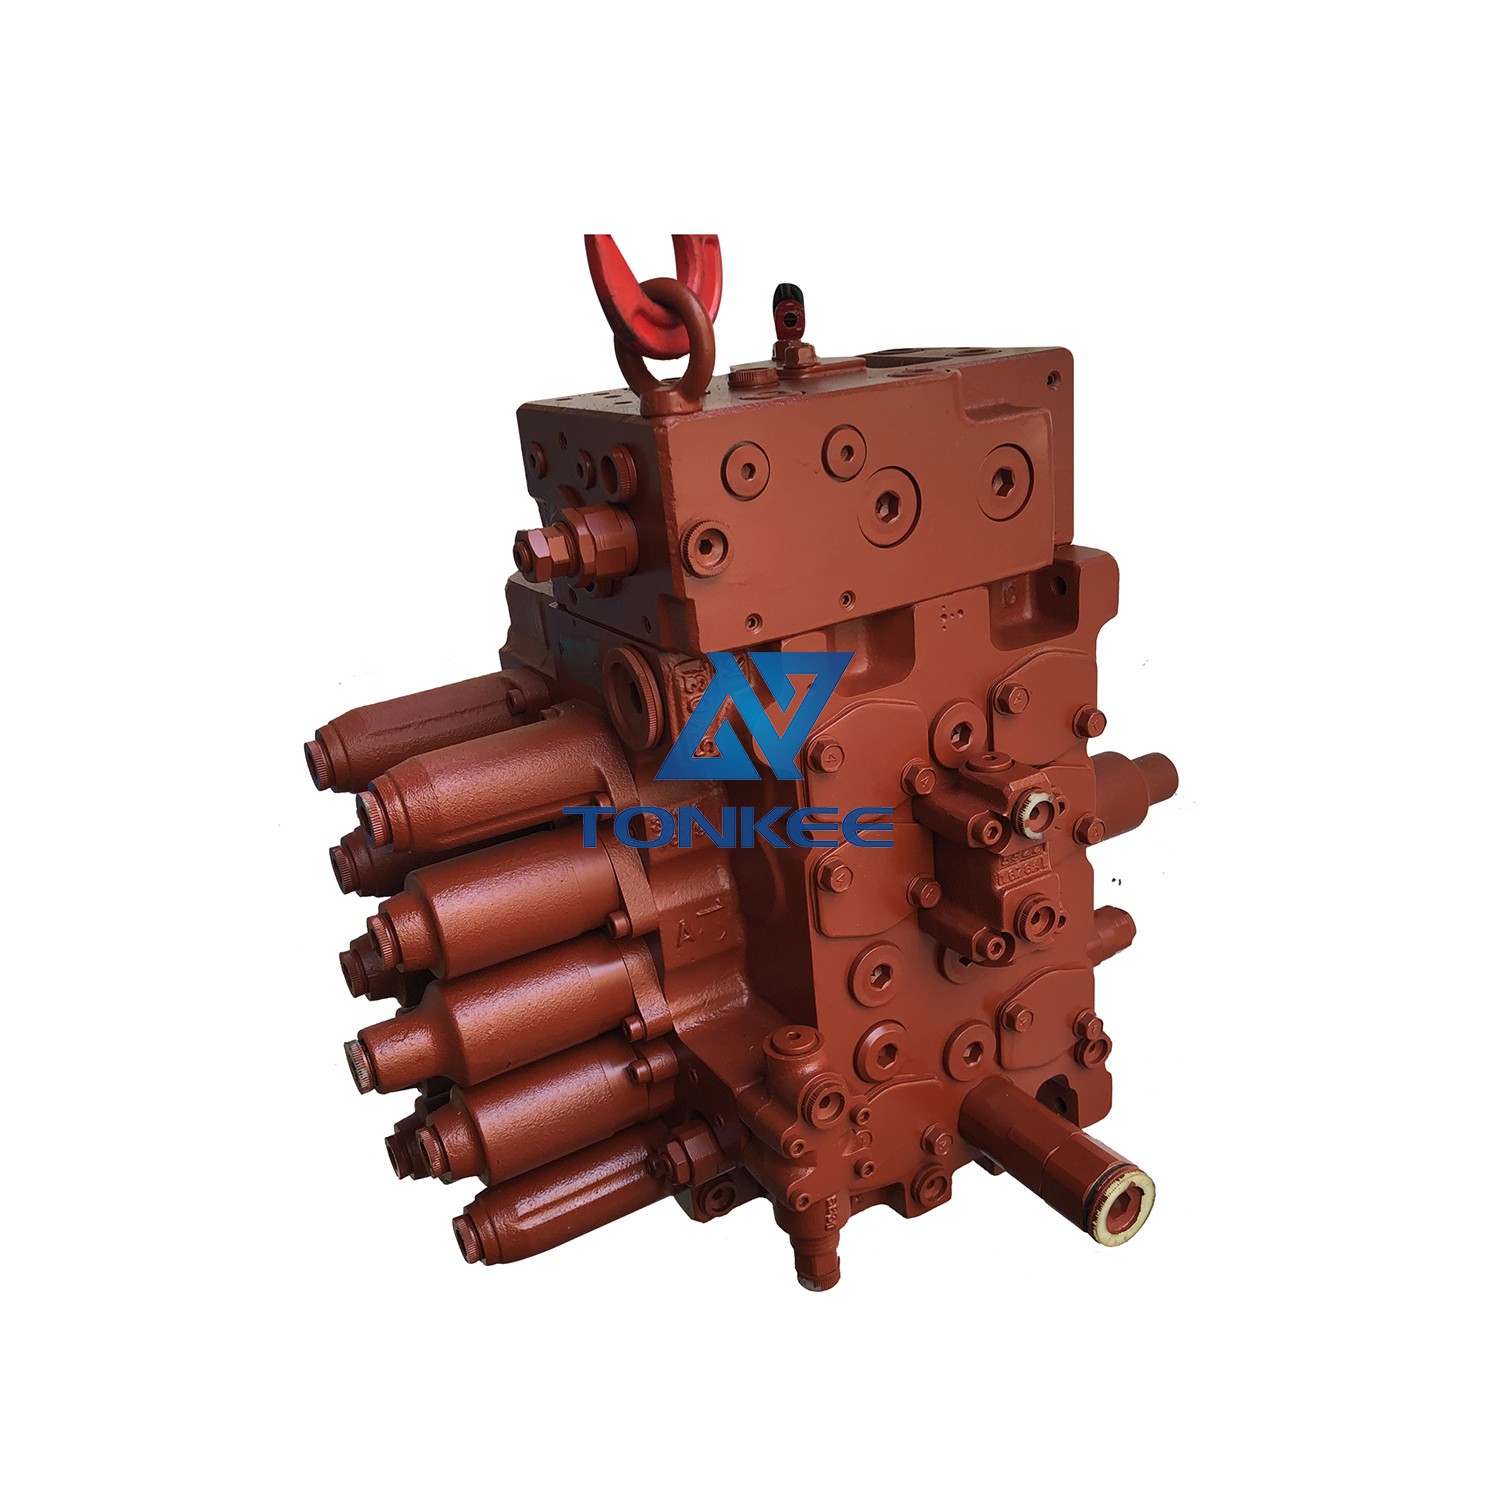 KMX15NA45001E VBN-106A-360330160 31N6-19110 31N6-10110 main control valve R210LC-7 R215-7 main control valve